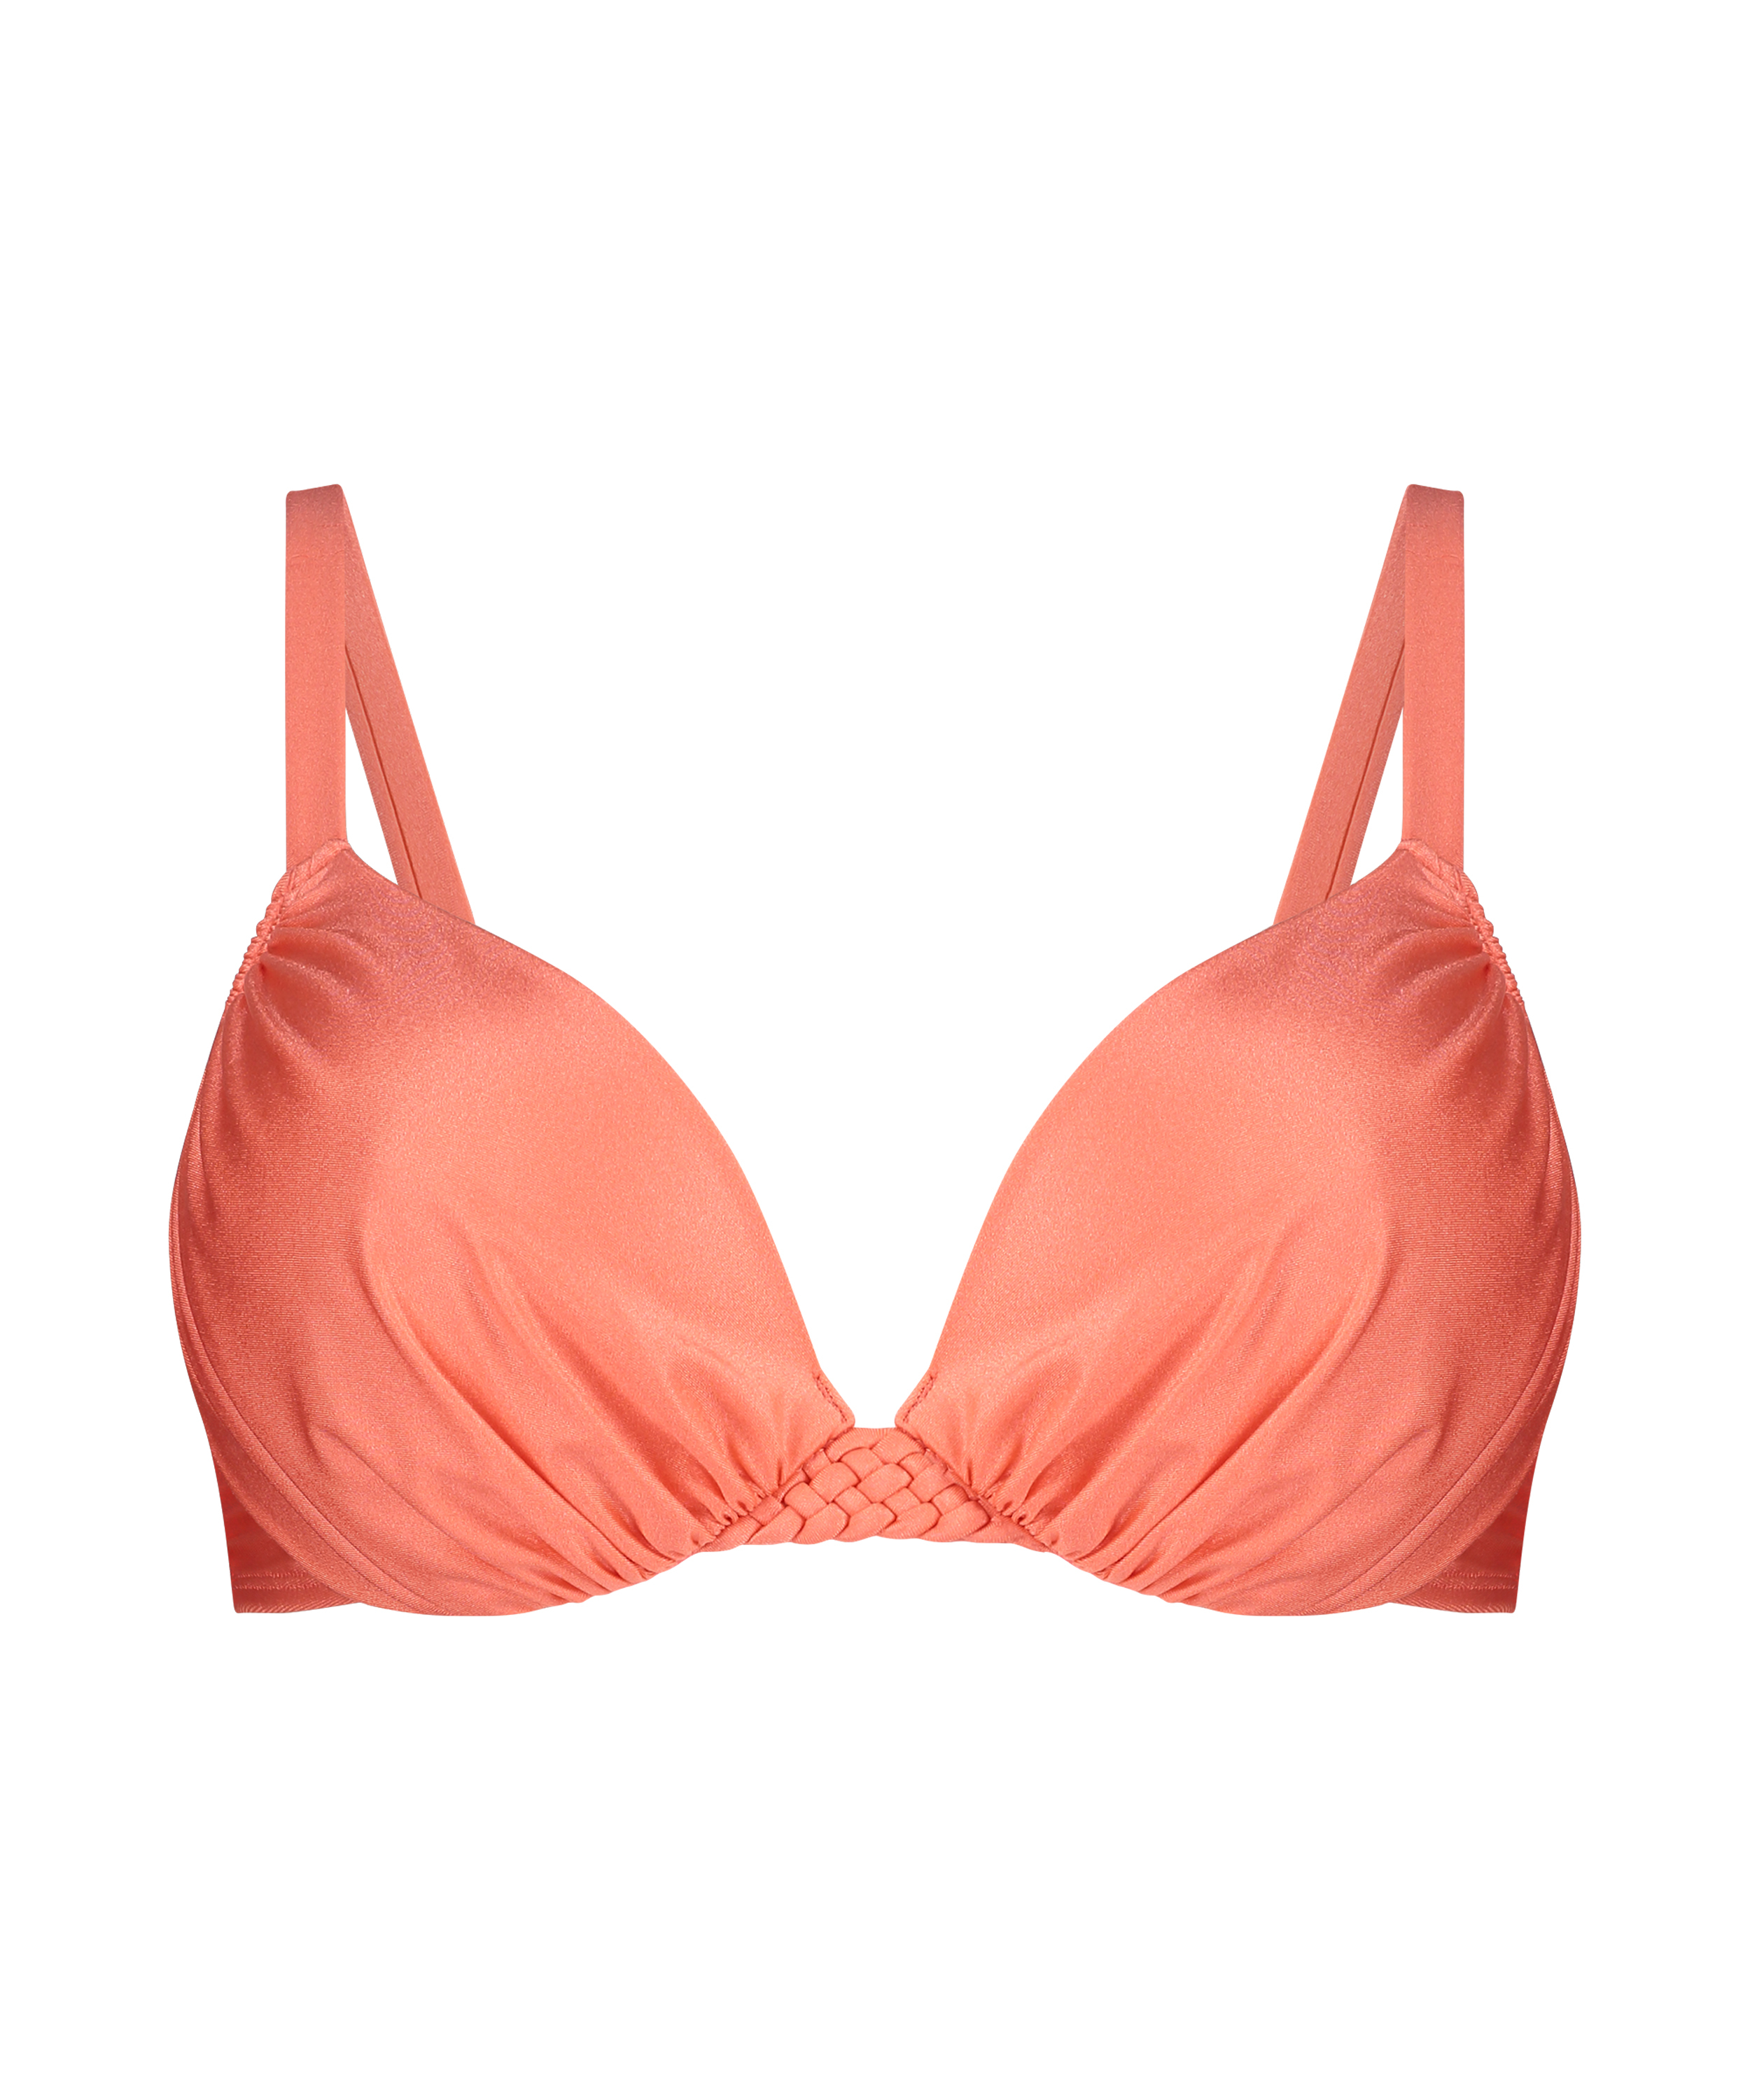 Formpressad bikiniöverdel med bygel Sunrise, Orange, main